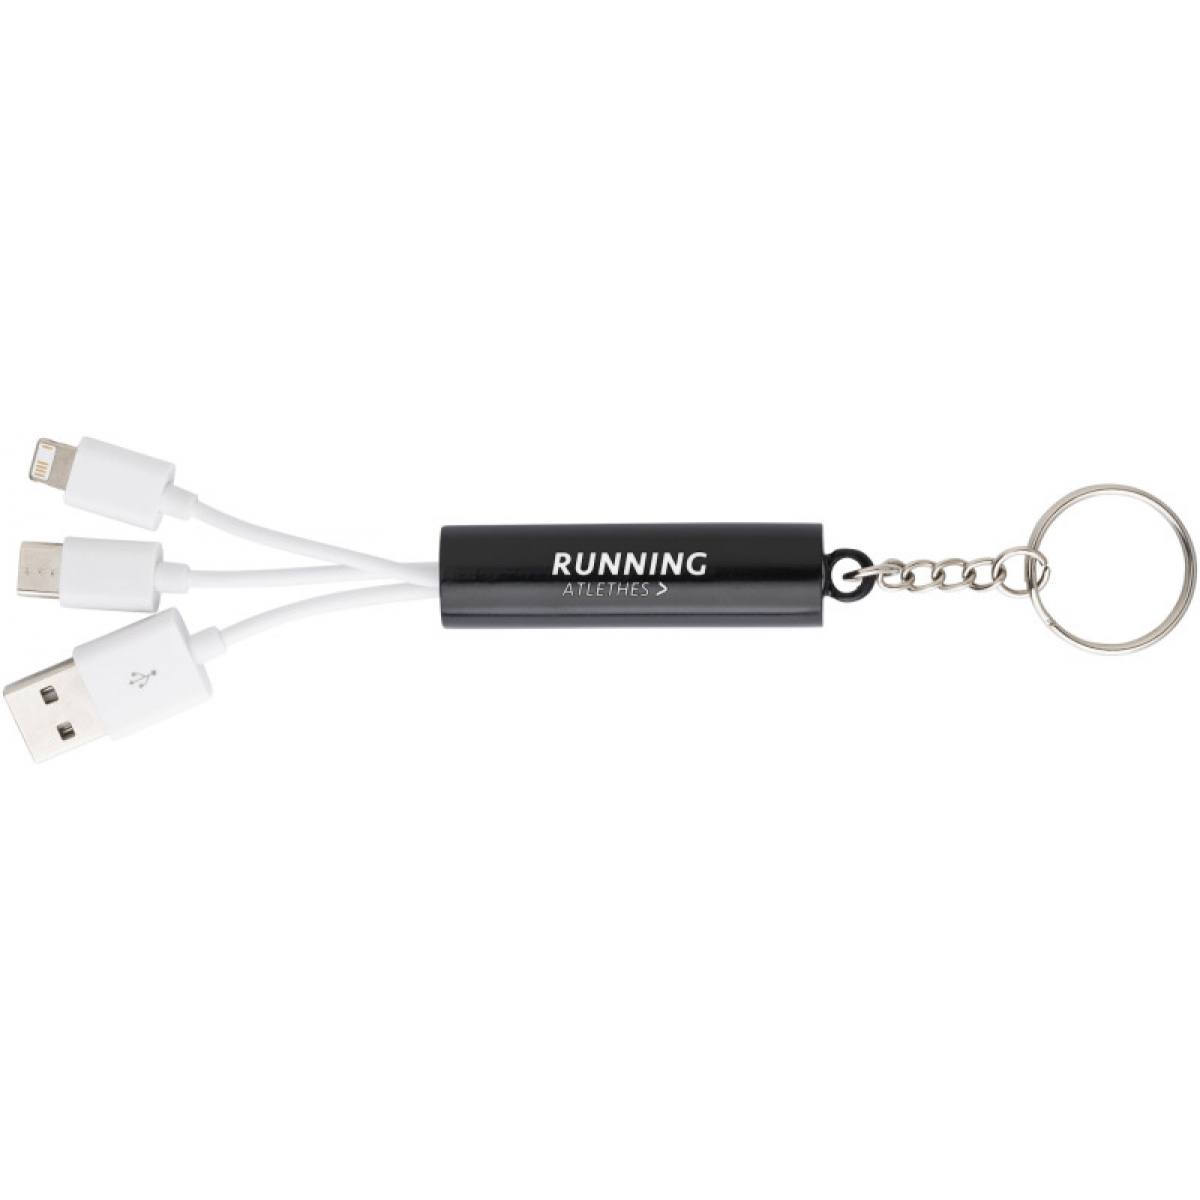 3-in-1 kabel set | Sleutelhanger | USB-C en Lightning 